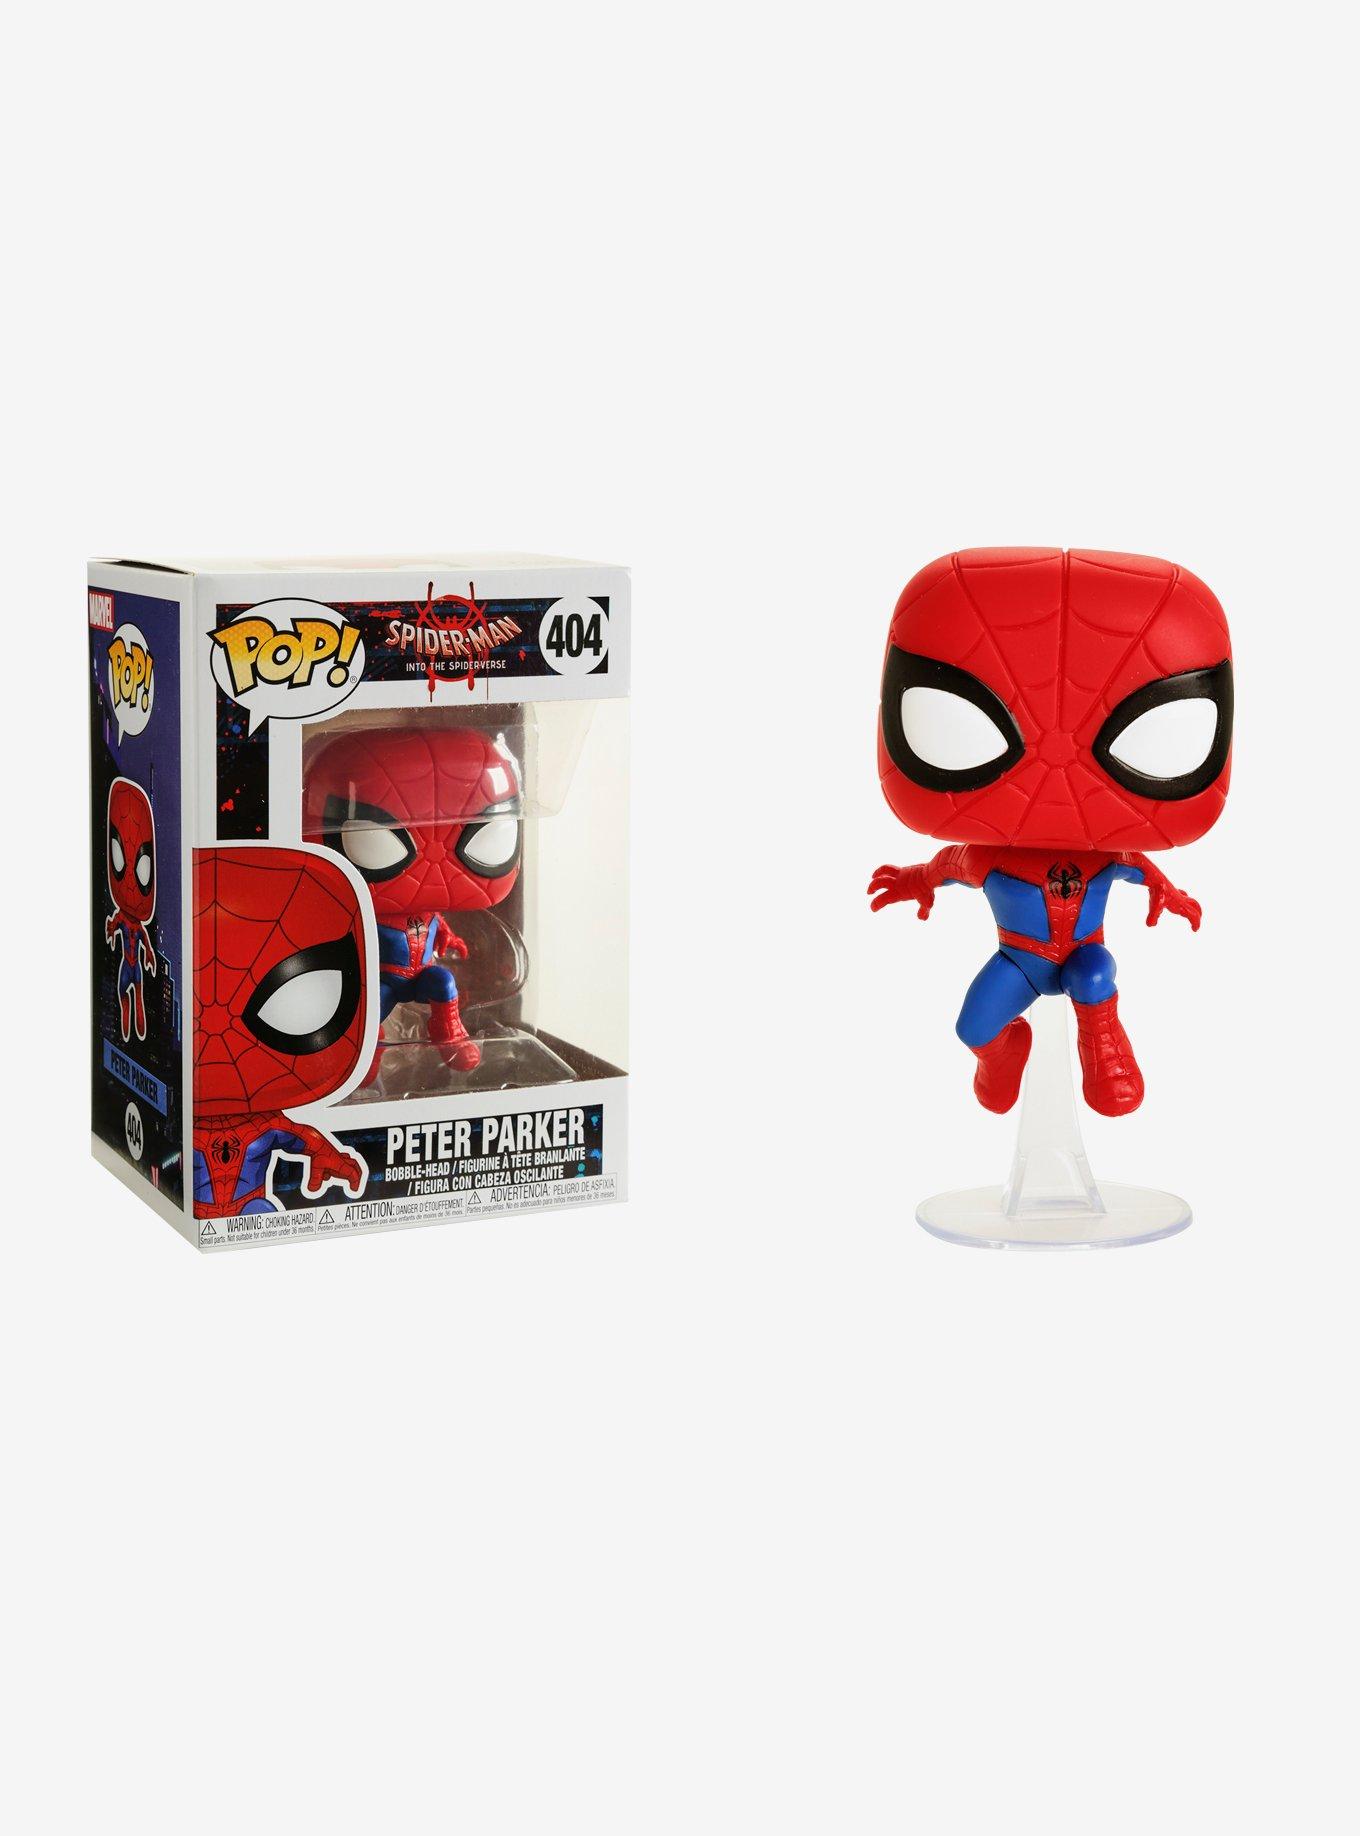 Buy Pop! Spider-Man (Facet) at Funko.